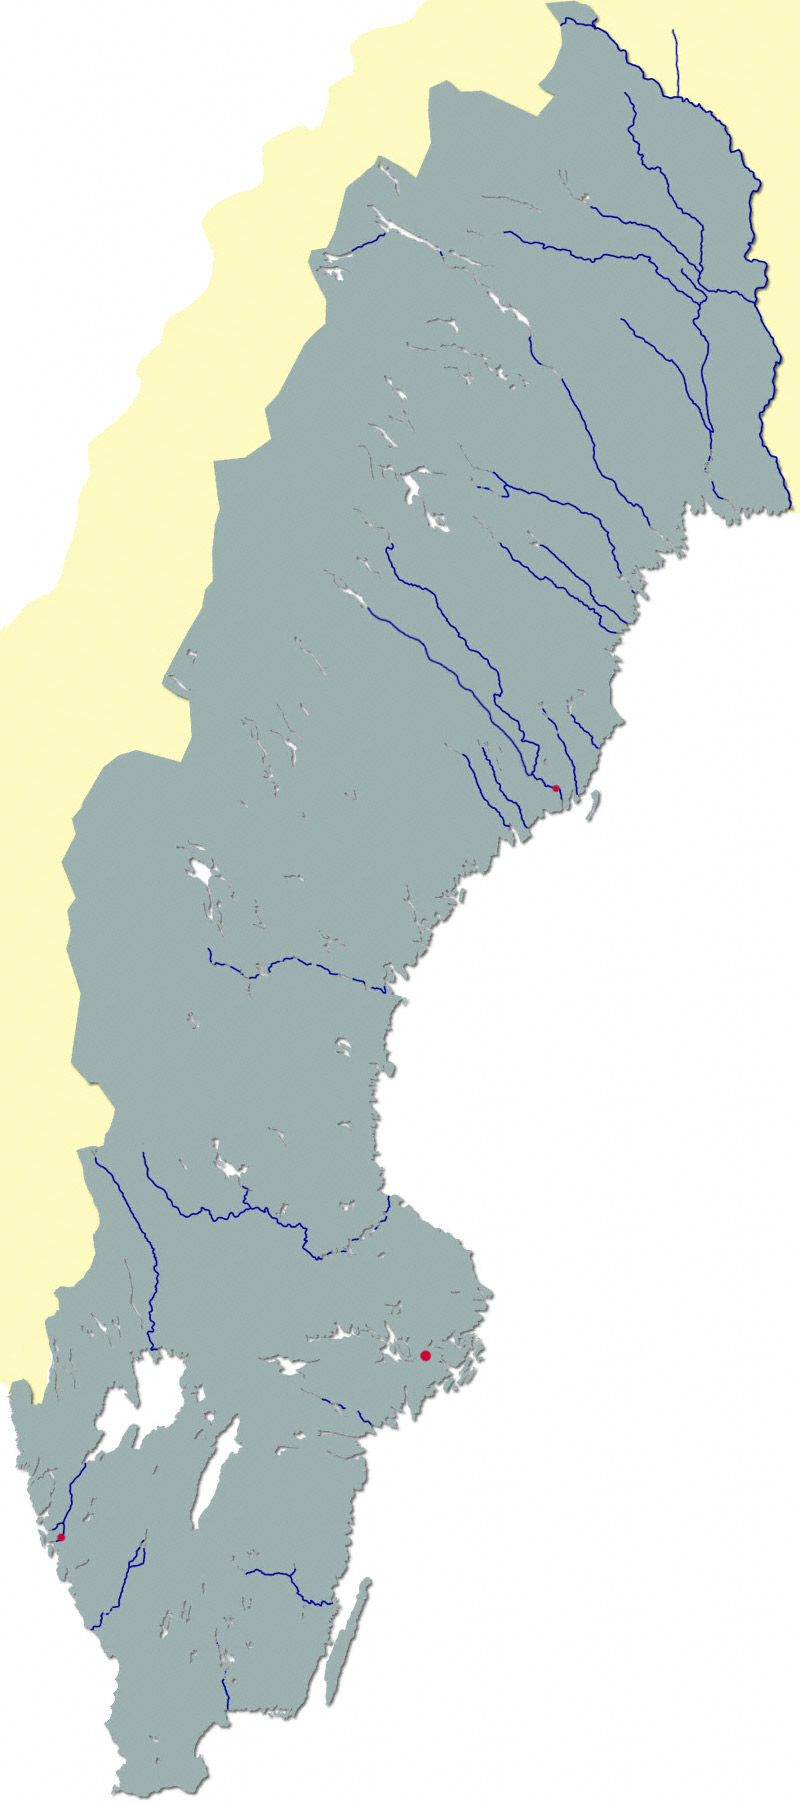 The Atlantic salmon rivers of Sweden